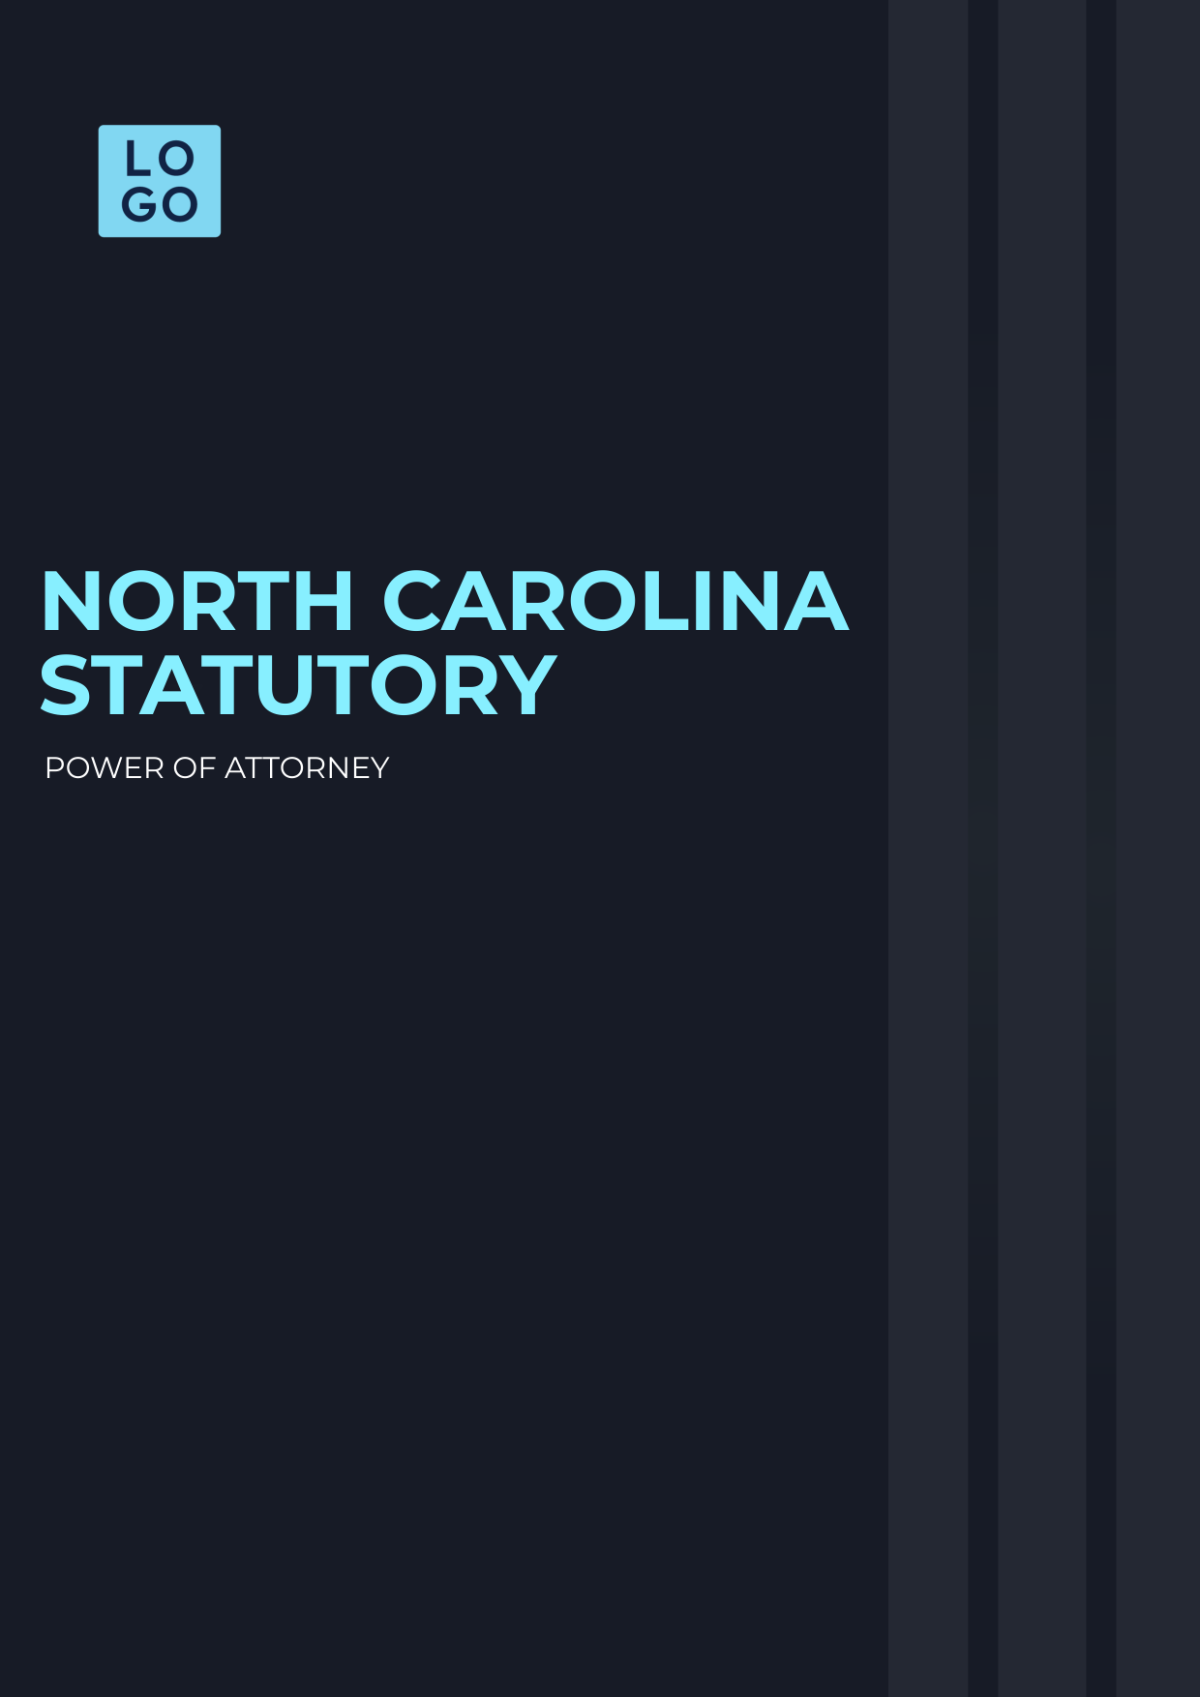 North Carolina Statutory Power of Attorney Template